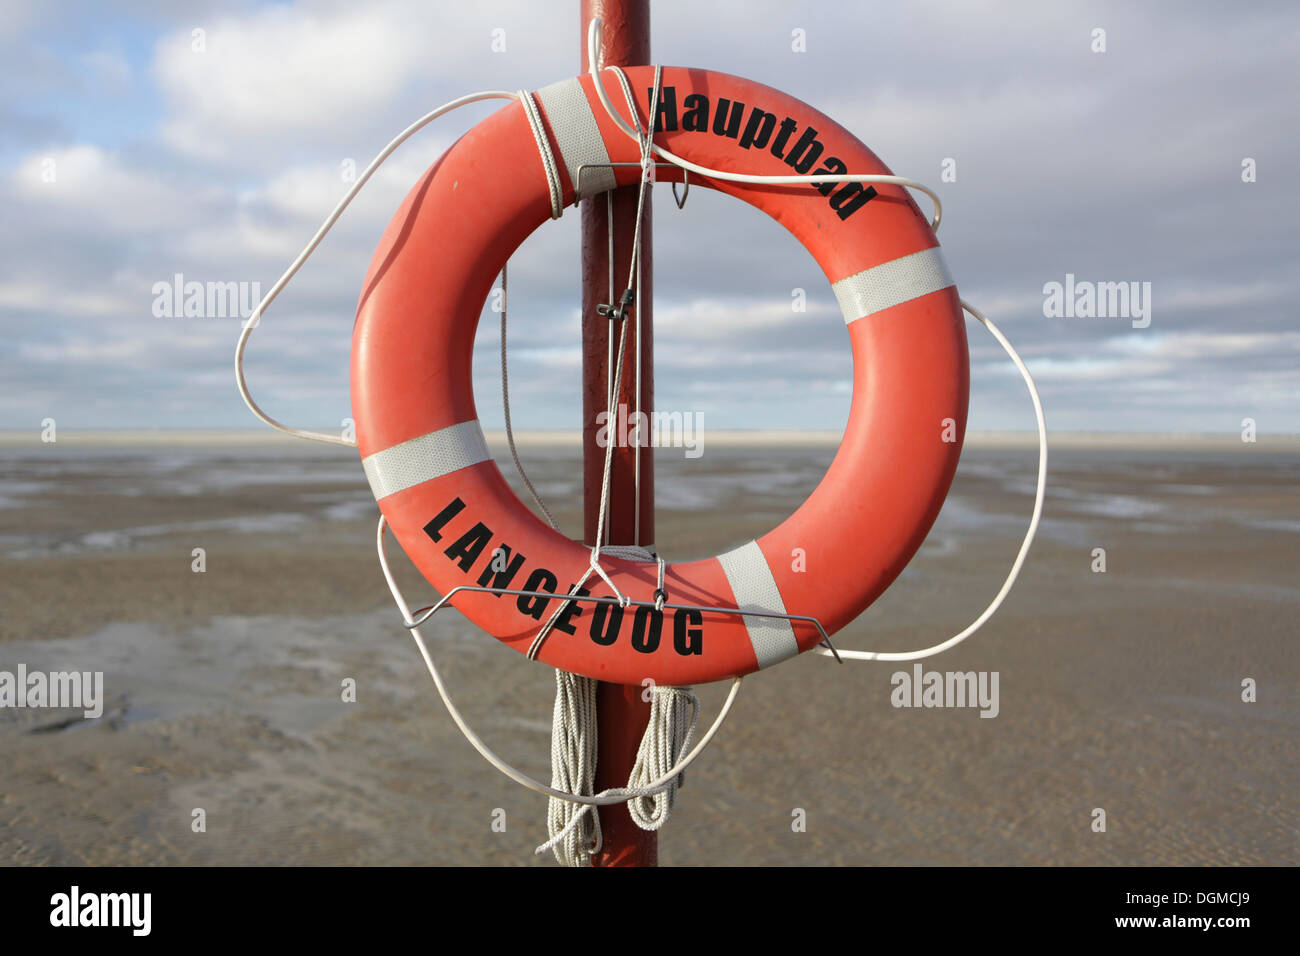 Lifebuoy on the main beach, Langeoog, Ostfriesische Inseln, Lower Saxony, Germany Stock Photo